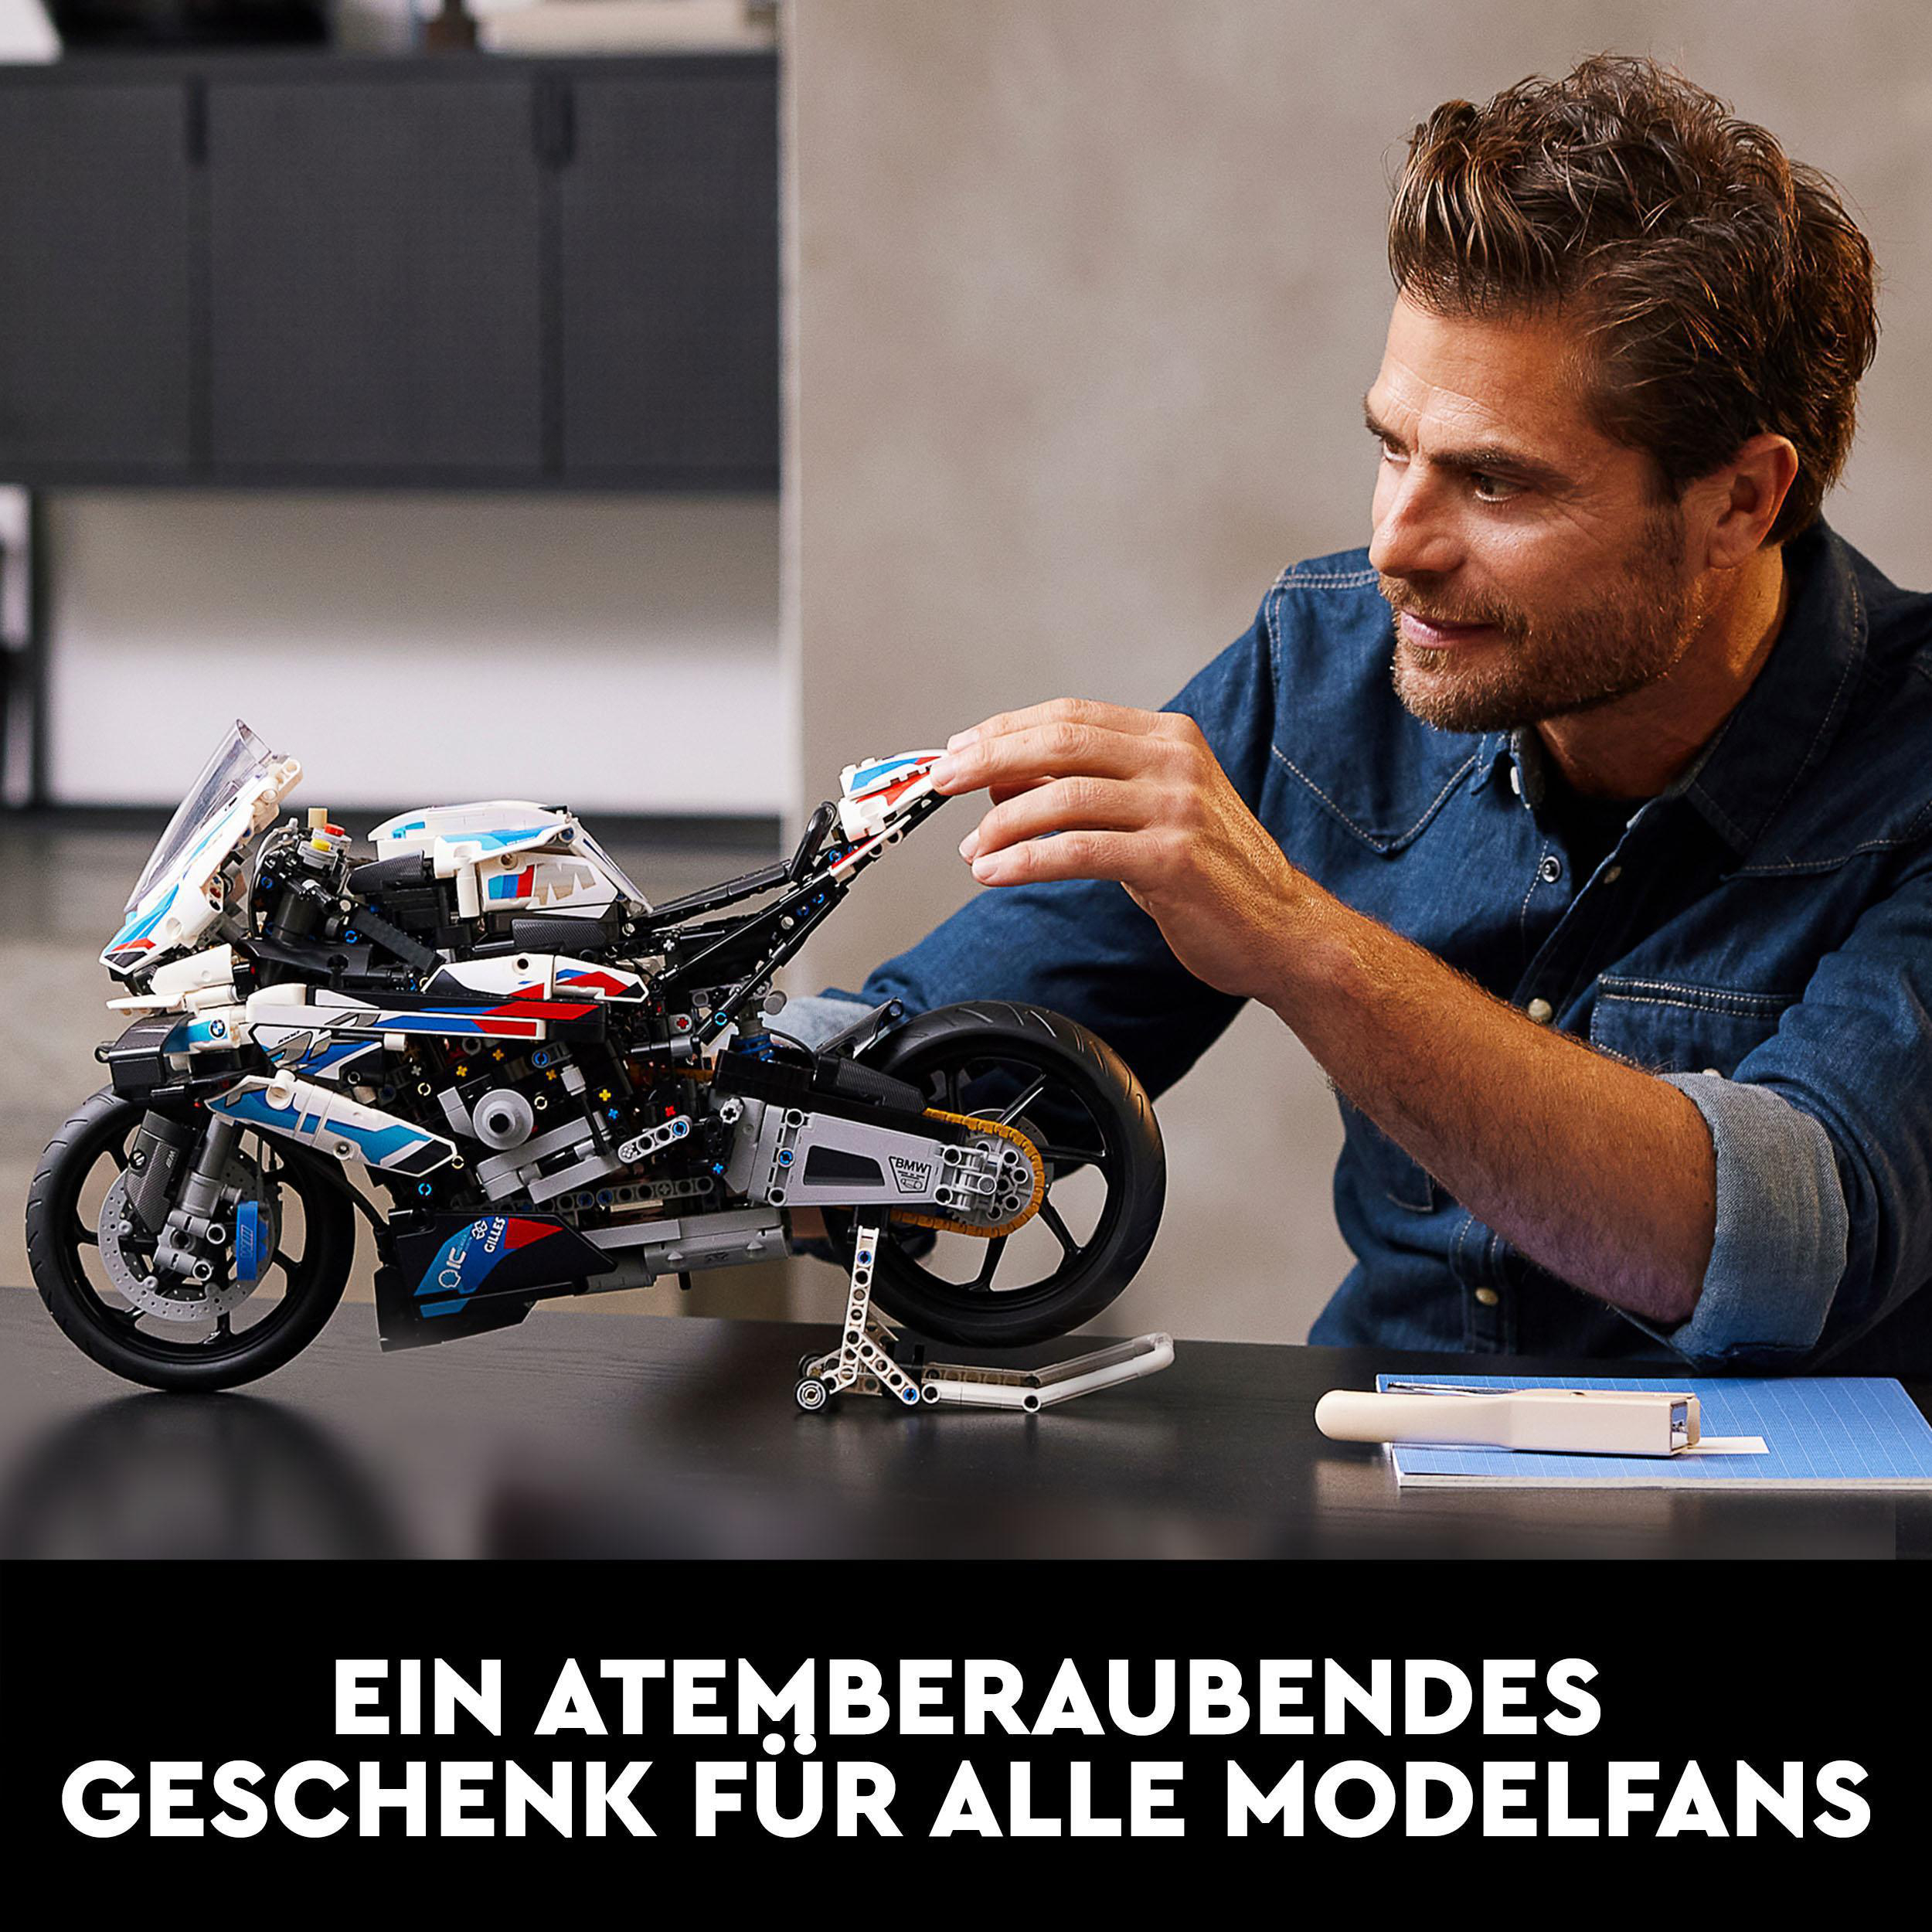 LEGO Technic 42130 BMW M Bausatz, RR Mehrfarbig 1000